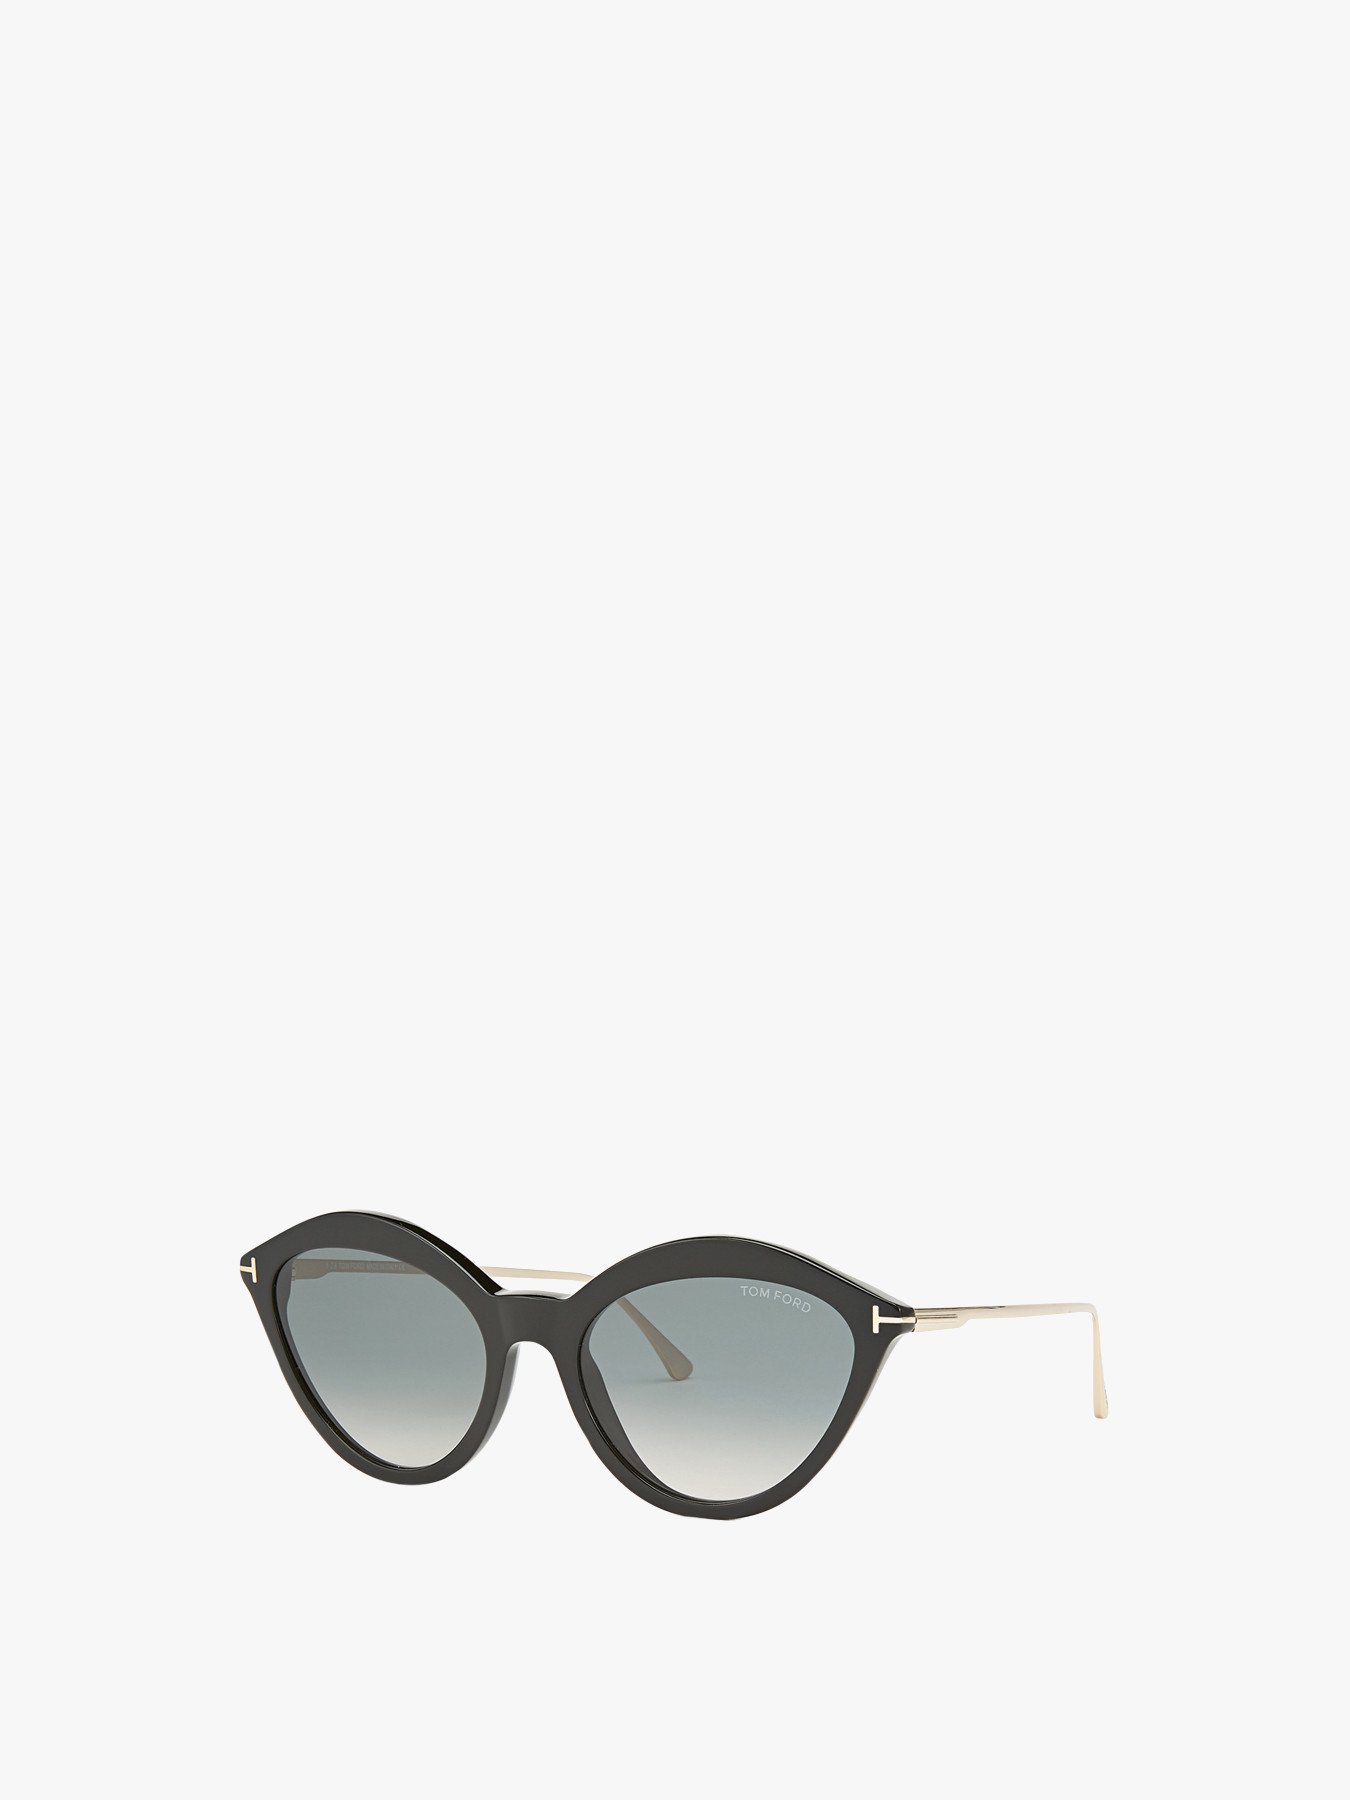 Women's Tom Ford Eyewear Chloe Sunglasses | Cat Eye | Fenwick